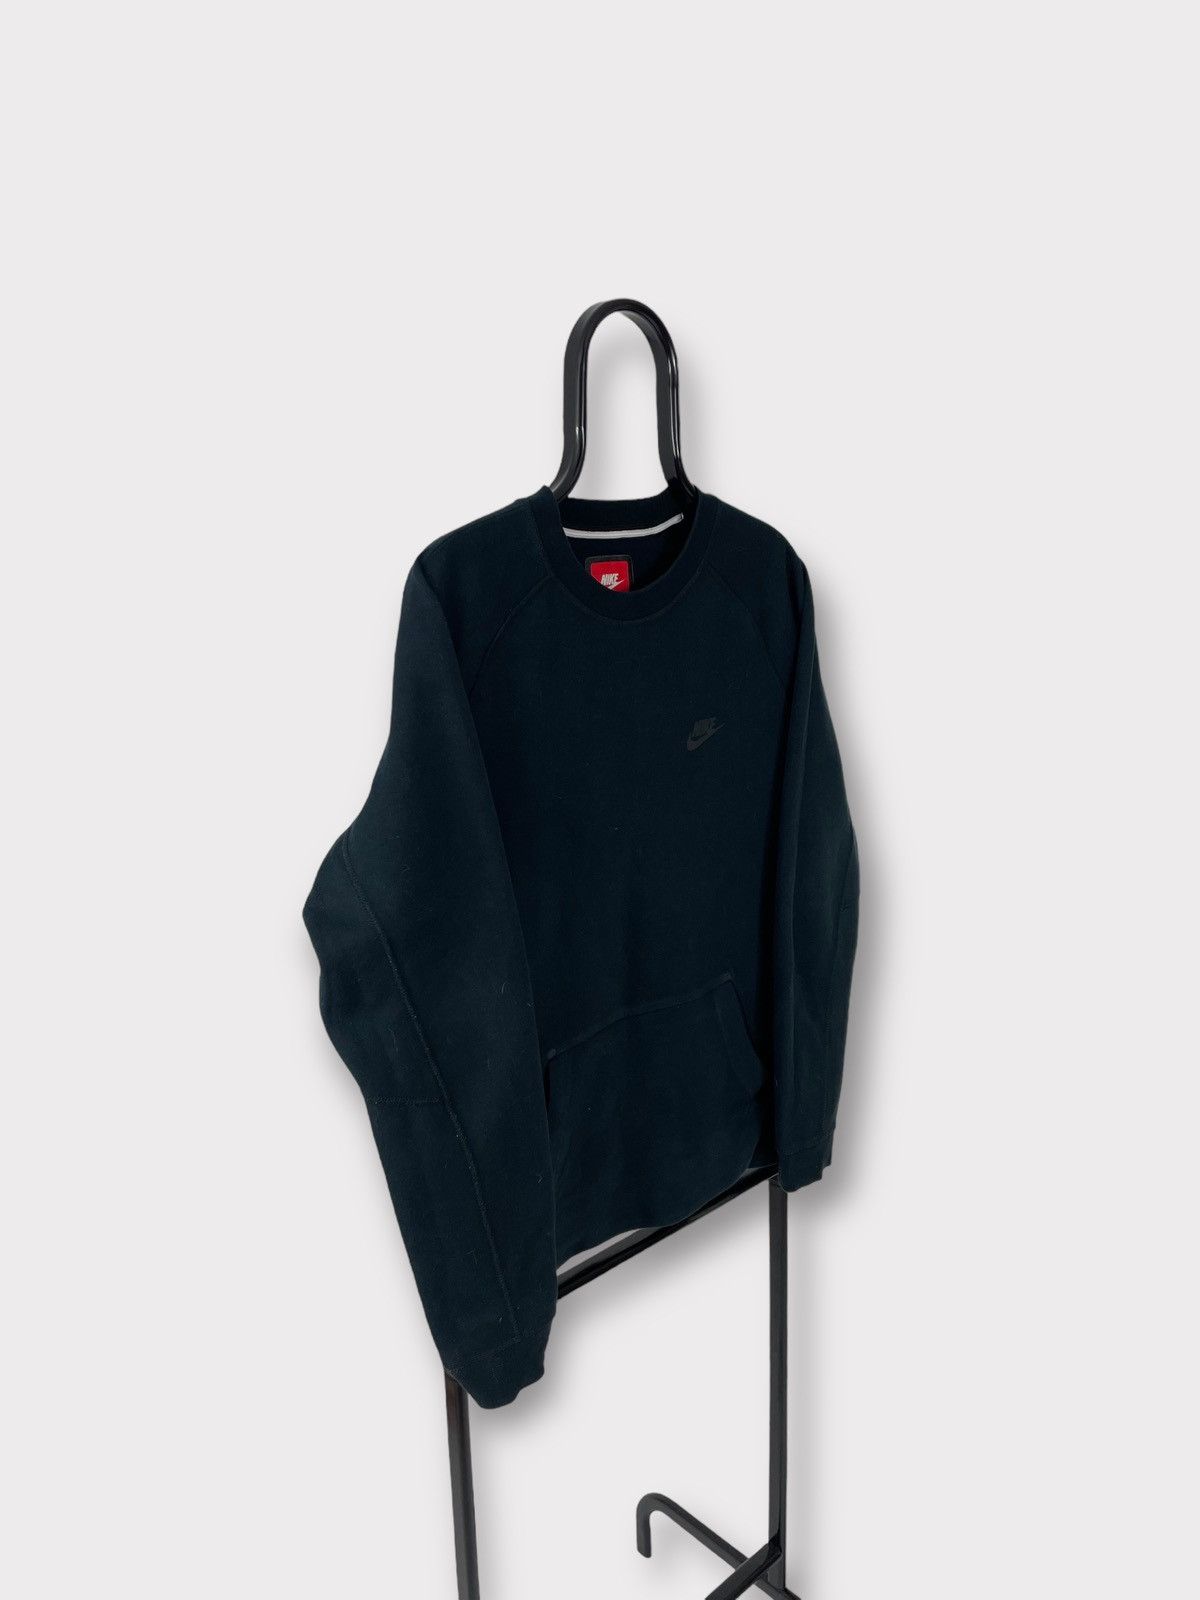 Nike Nike Tech Fleece Black Crewneck Sweatshirt Size US S / EU 44-46 / 1 - 2 Preview